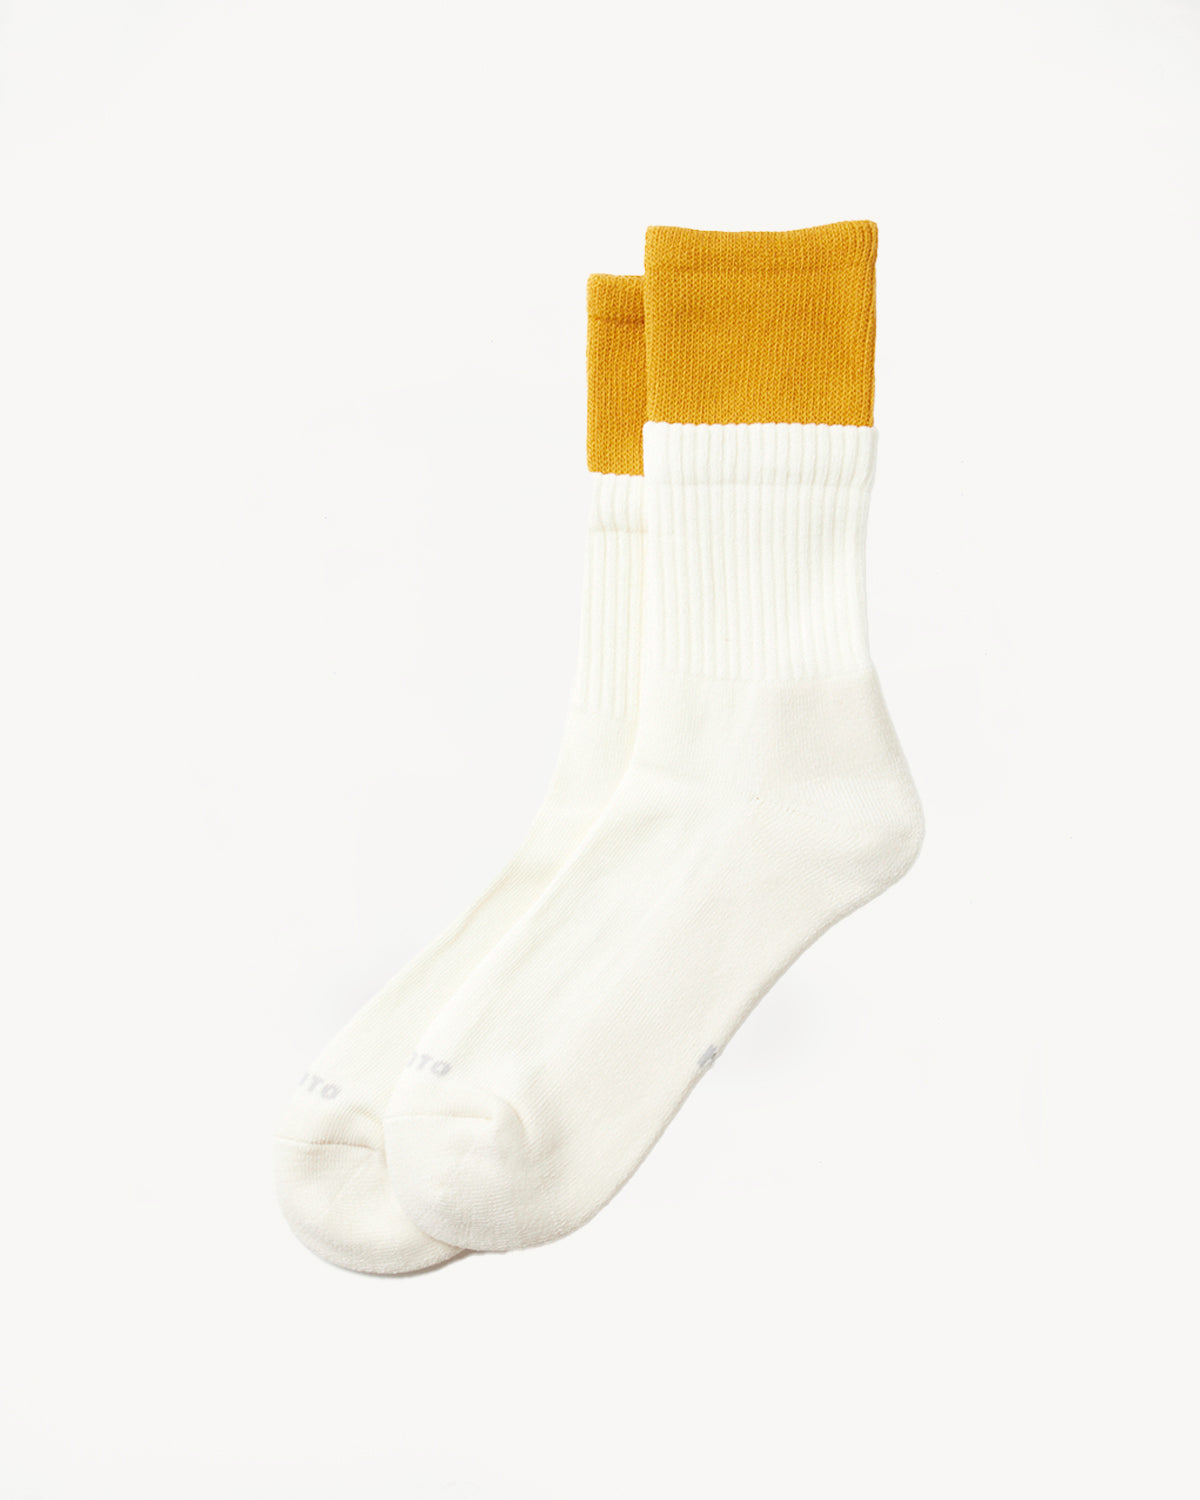 R1421 - Organic Cotton Double Layer Crew Socks - Yellow, Off White